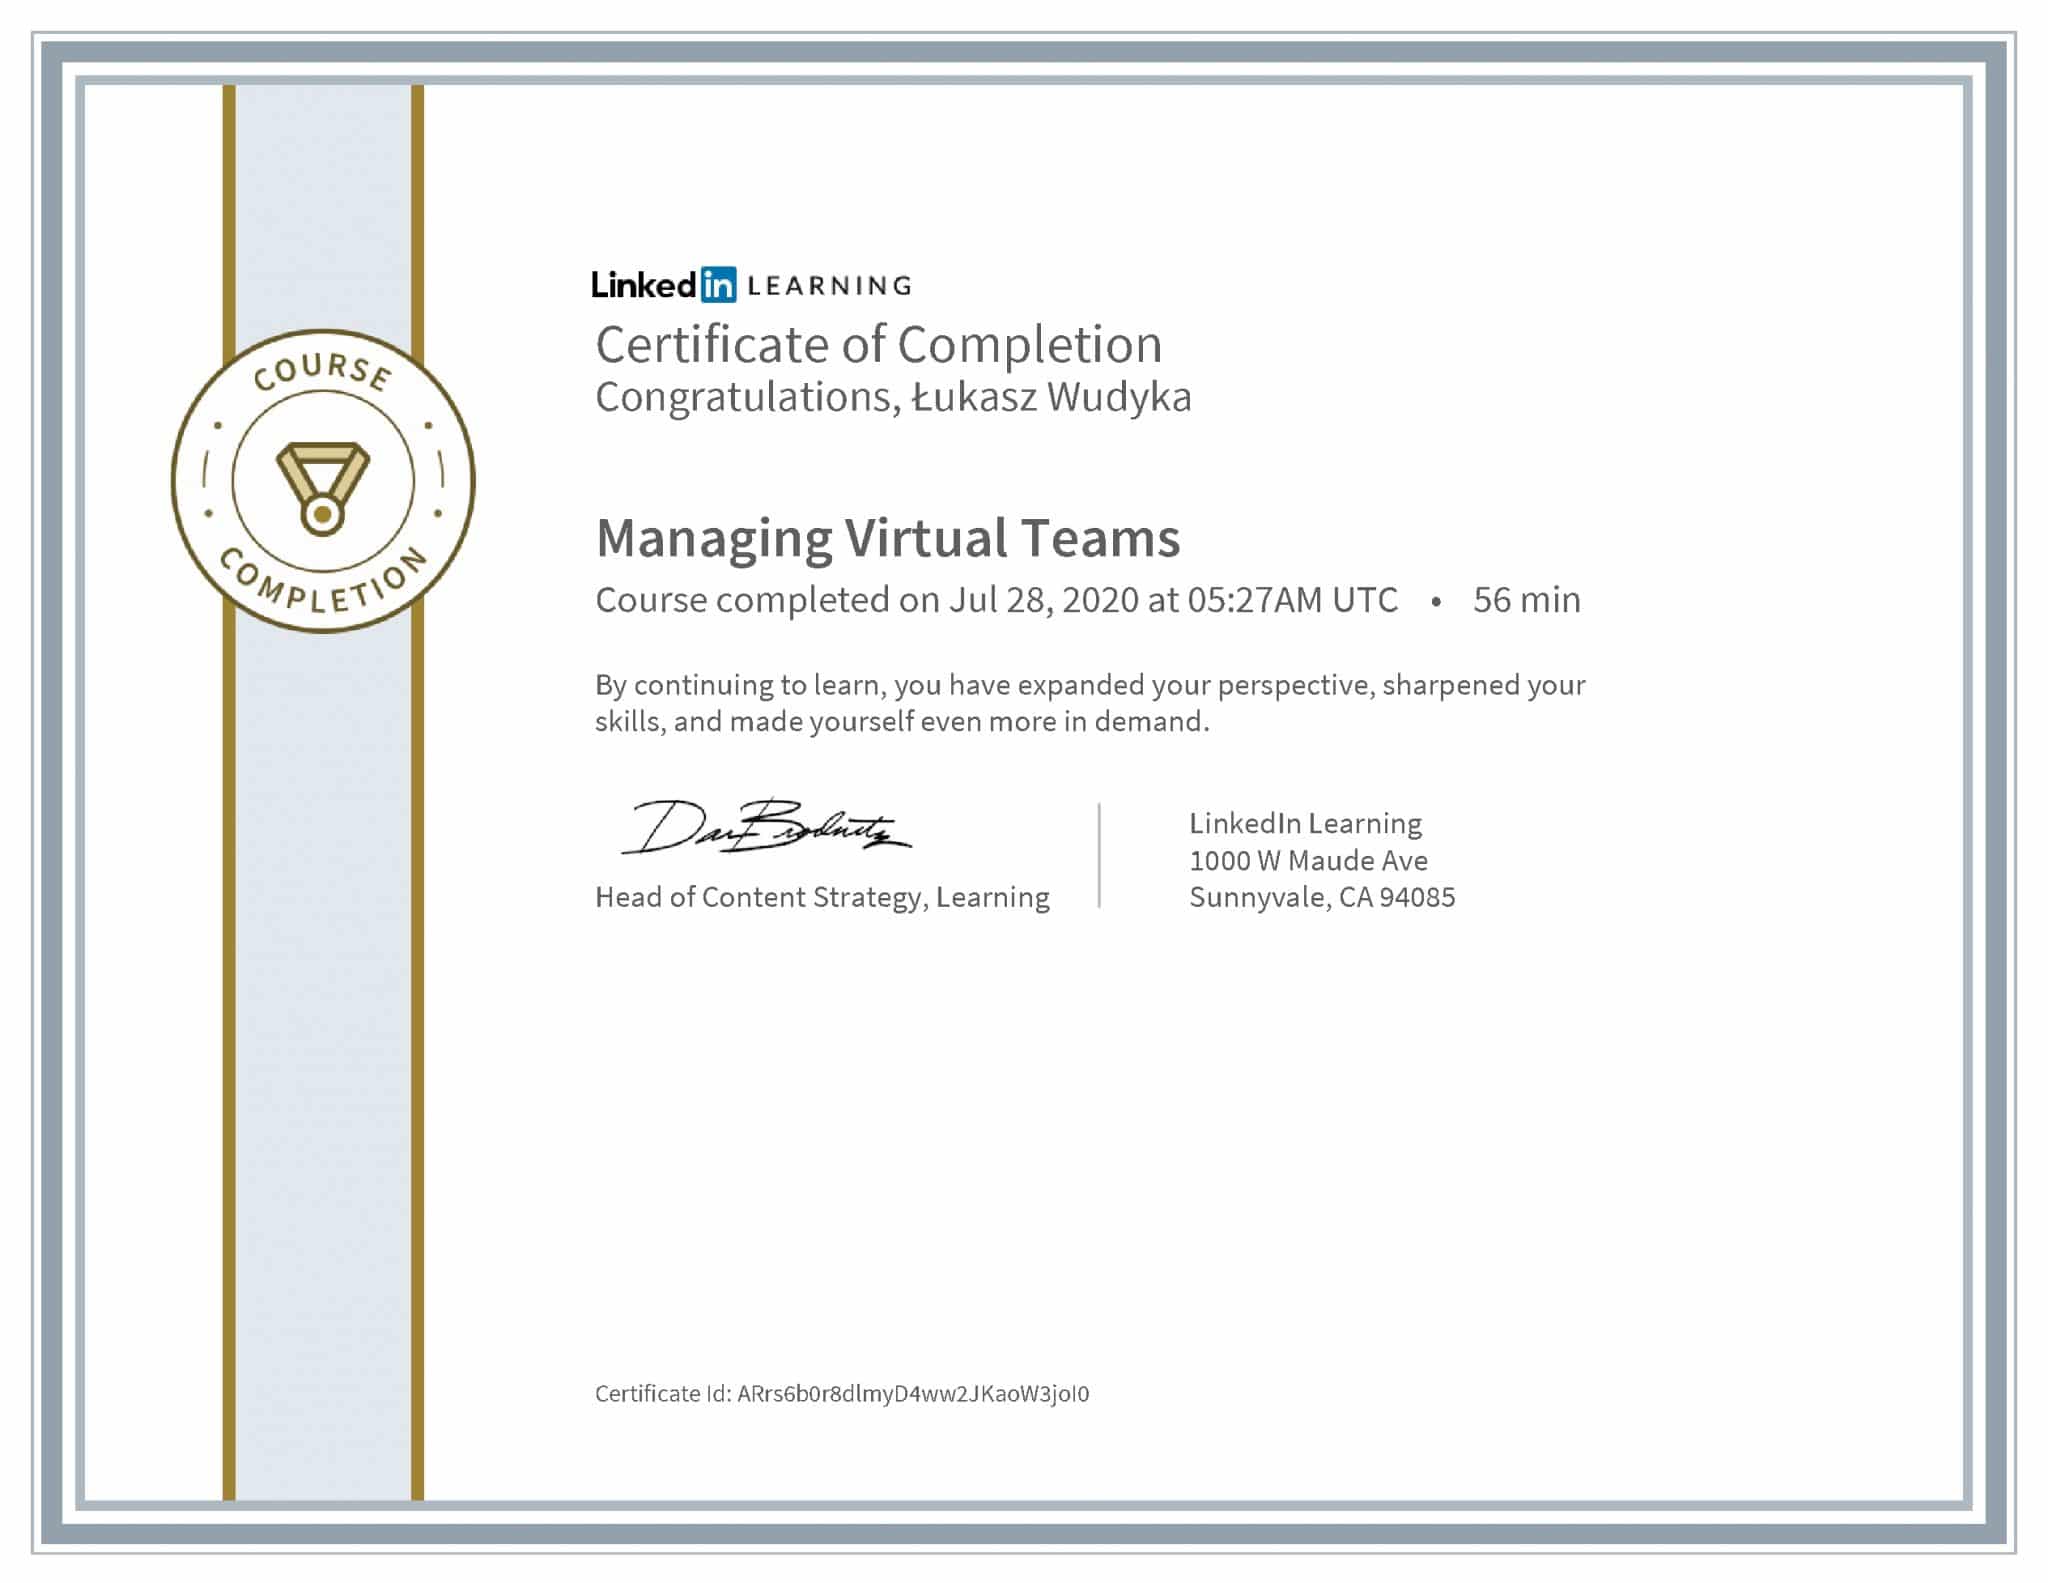 Łukasz Wudyka certyfikat LinkedIn Managing Virtual Teams